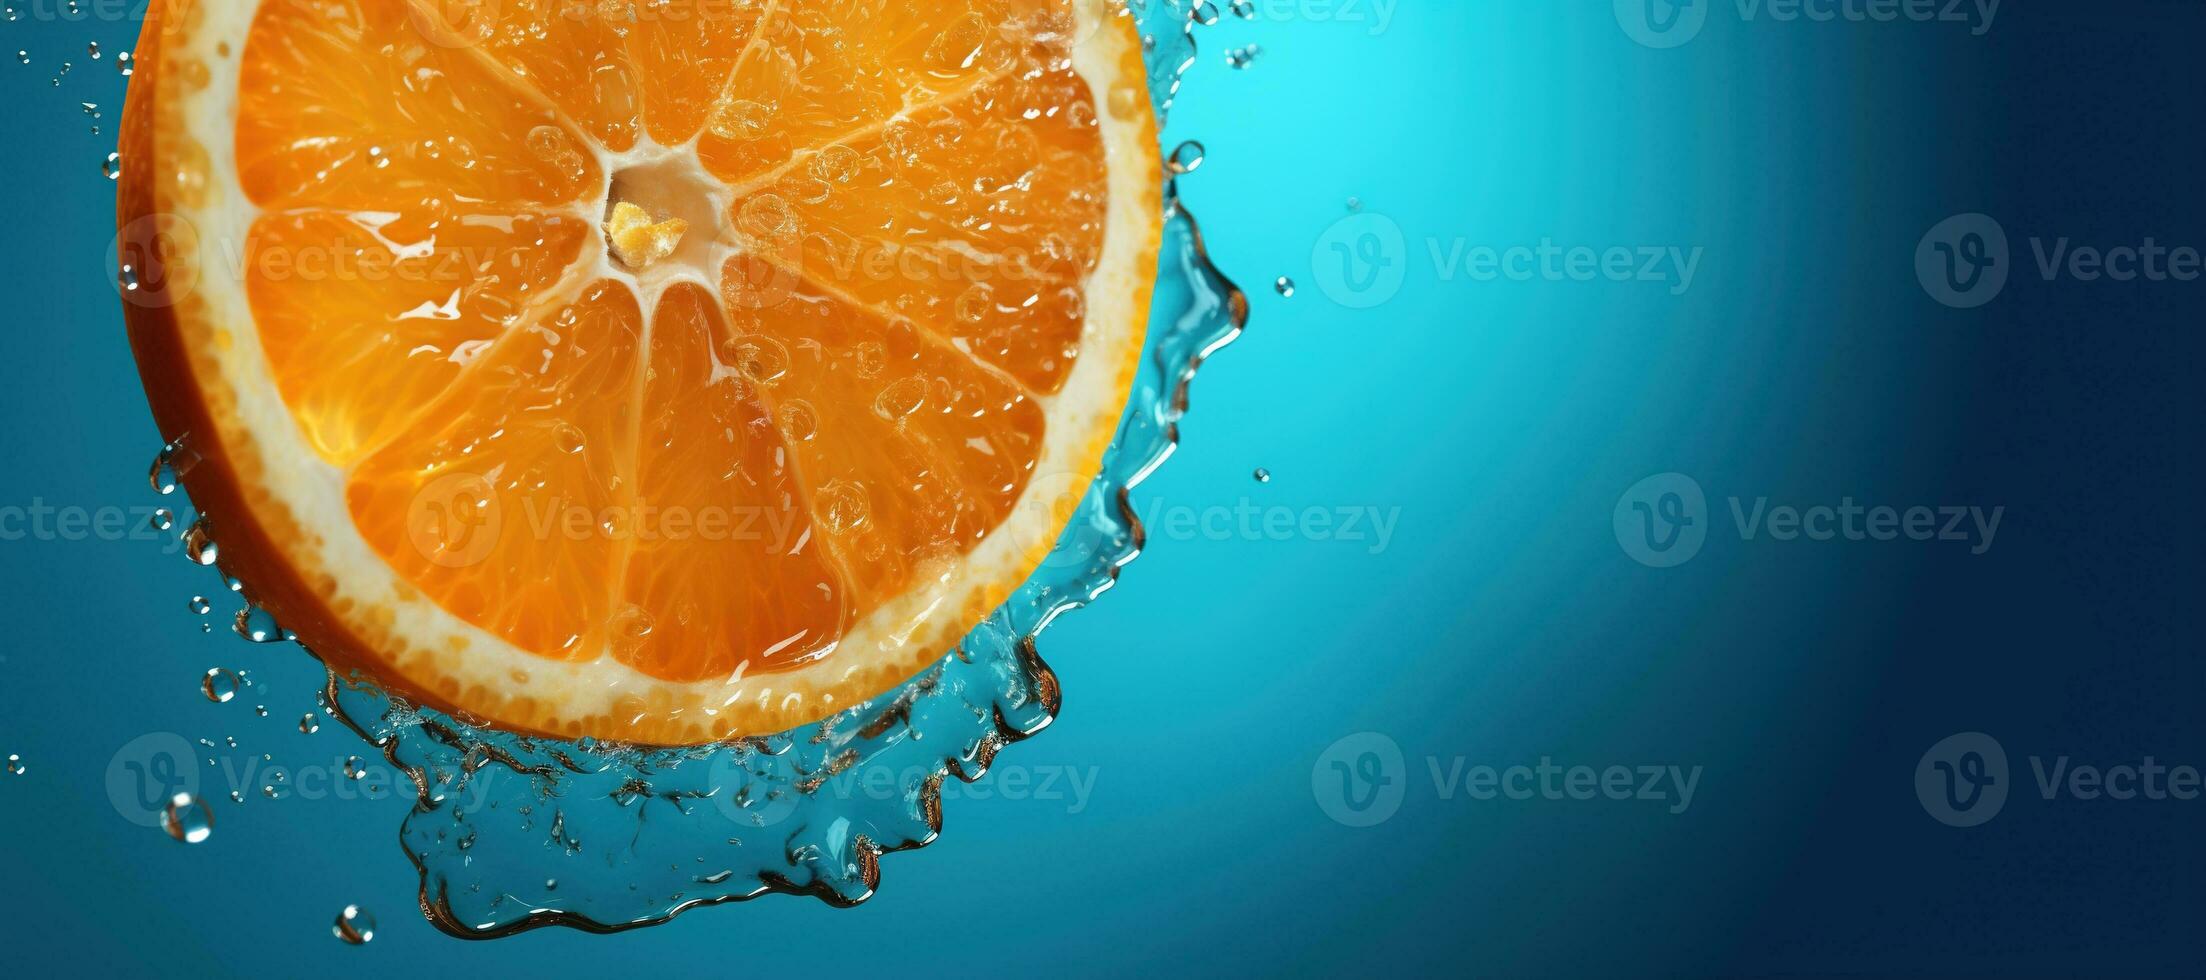 generativo ai, Fresco naranja macro, rebanada en agua chapoteo, naranja y azul turquesa colores foto